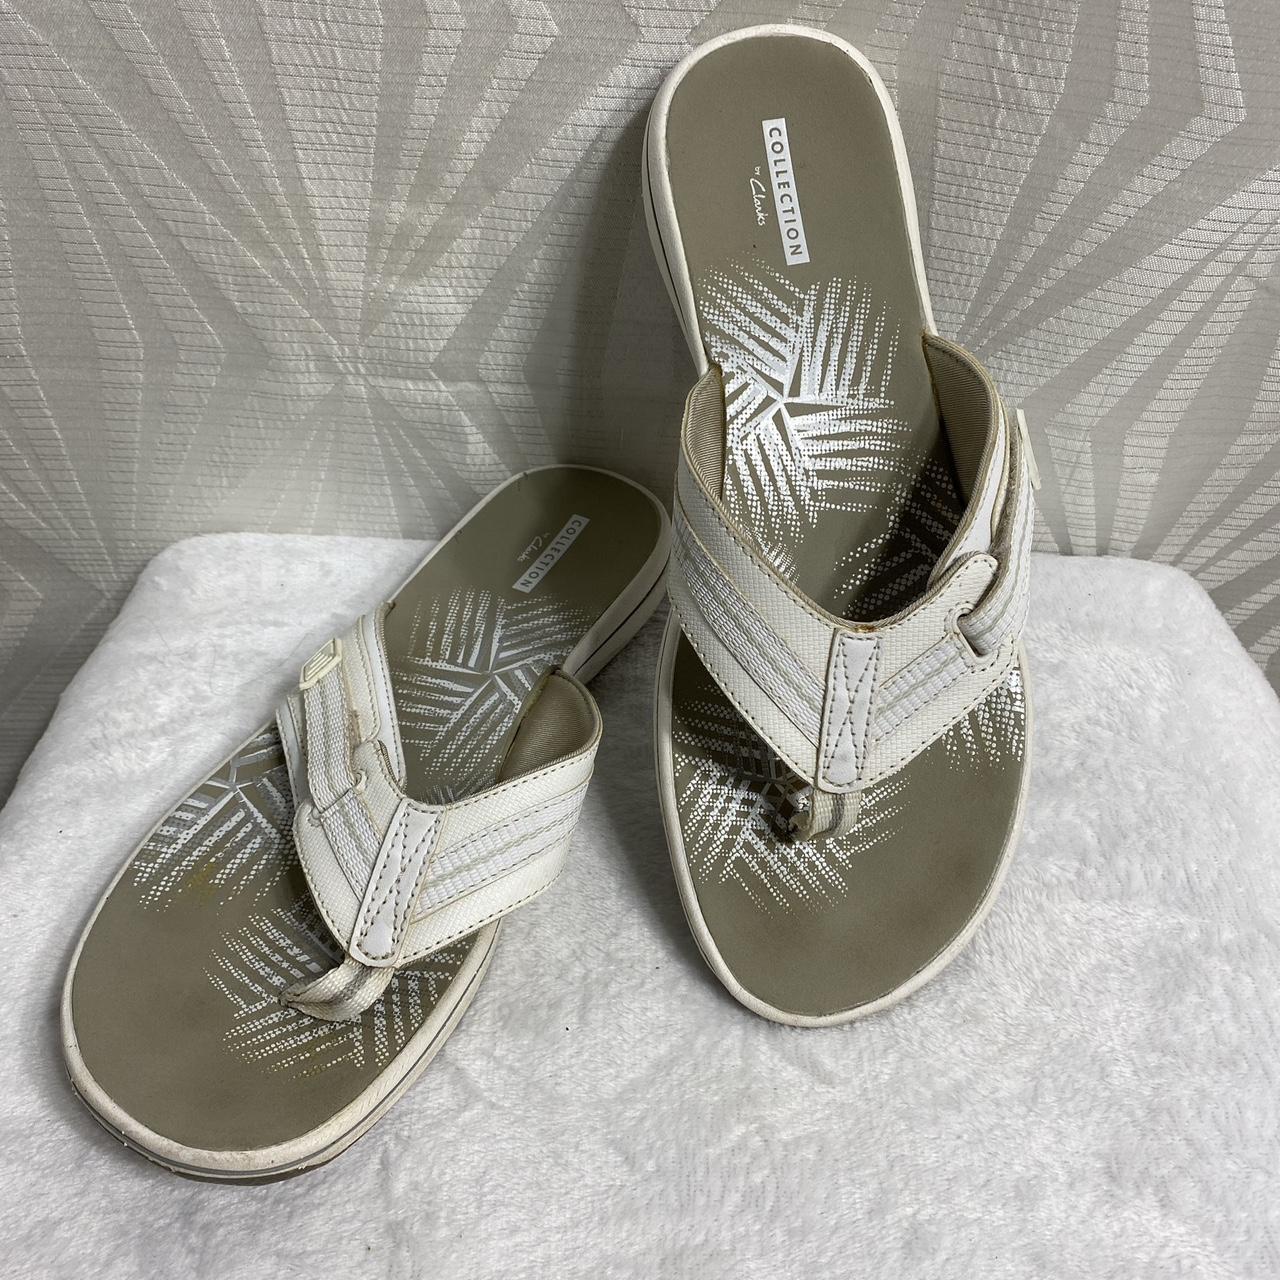 Clarks Corsio Slide Women's Sandals White Canvas 26152044 - Walmart.com